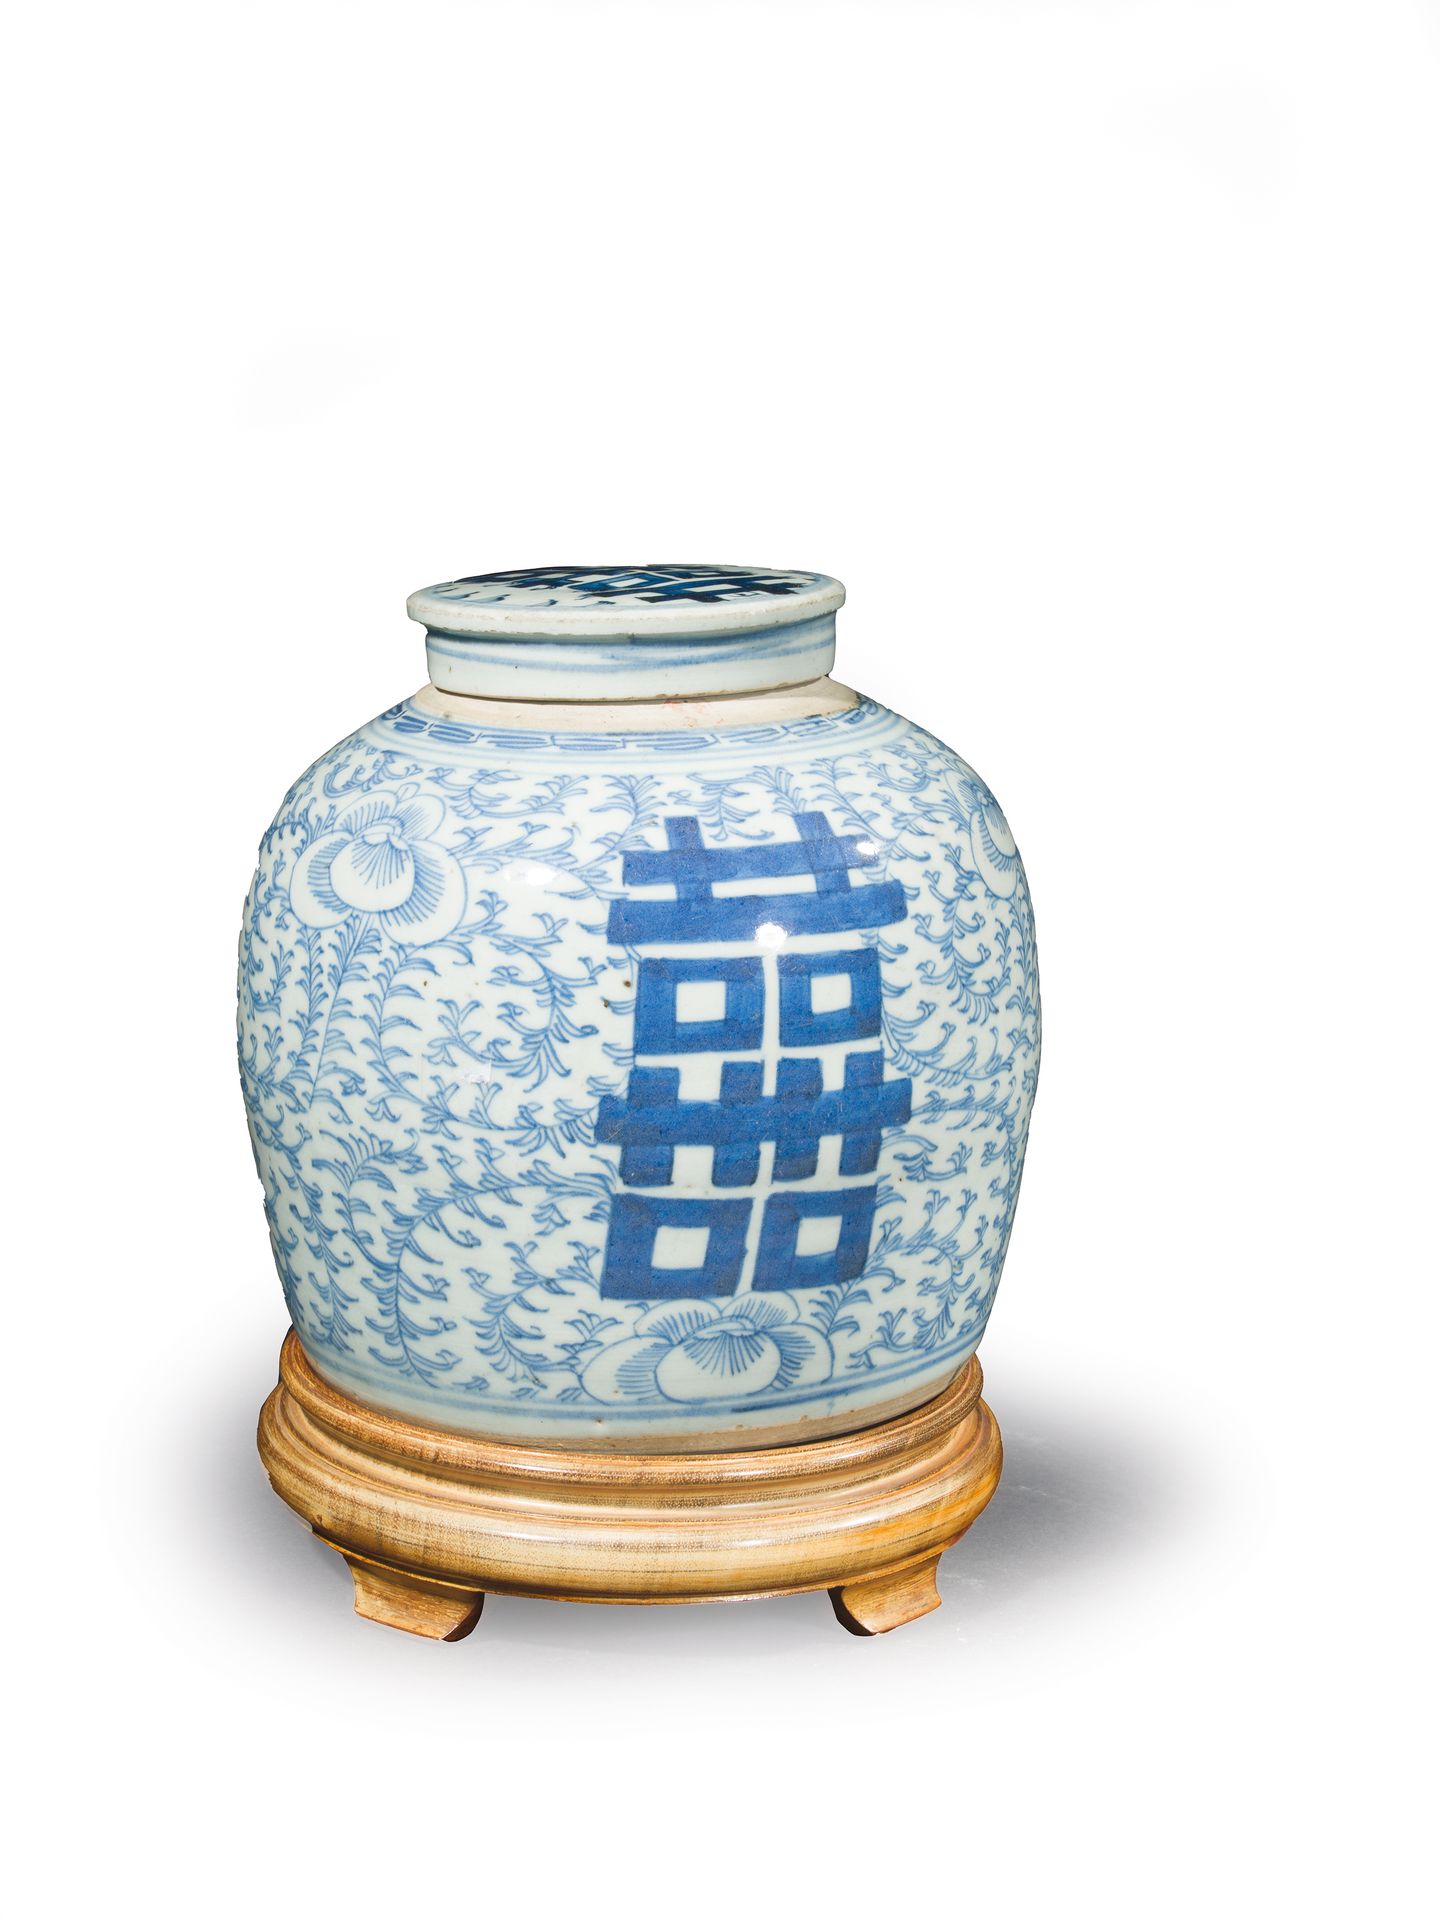 Null 
Bote de jengibre de porcelana azul y blanca.

China Siglo XX

H. 26 cm